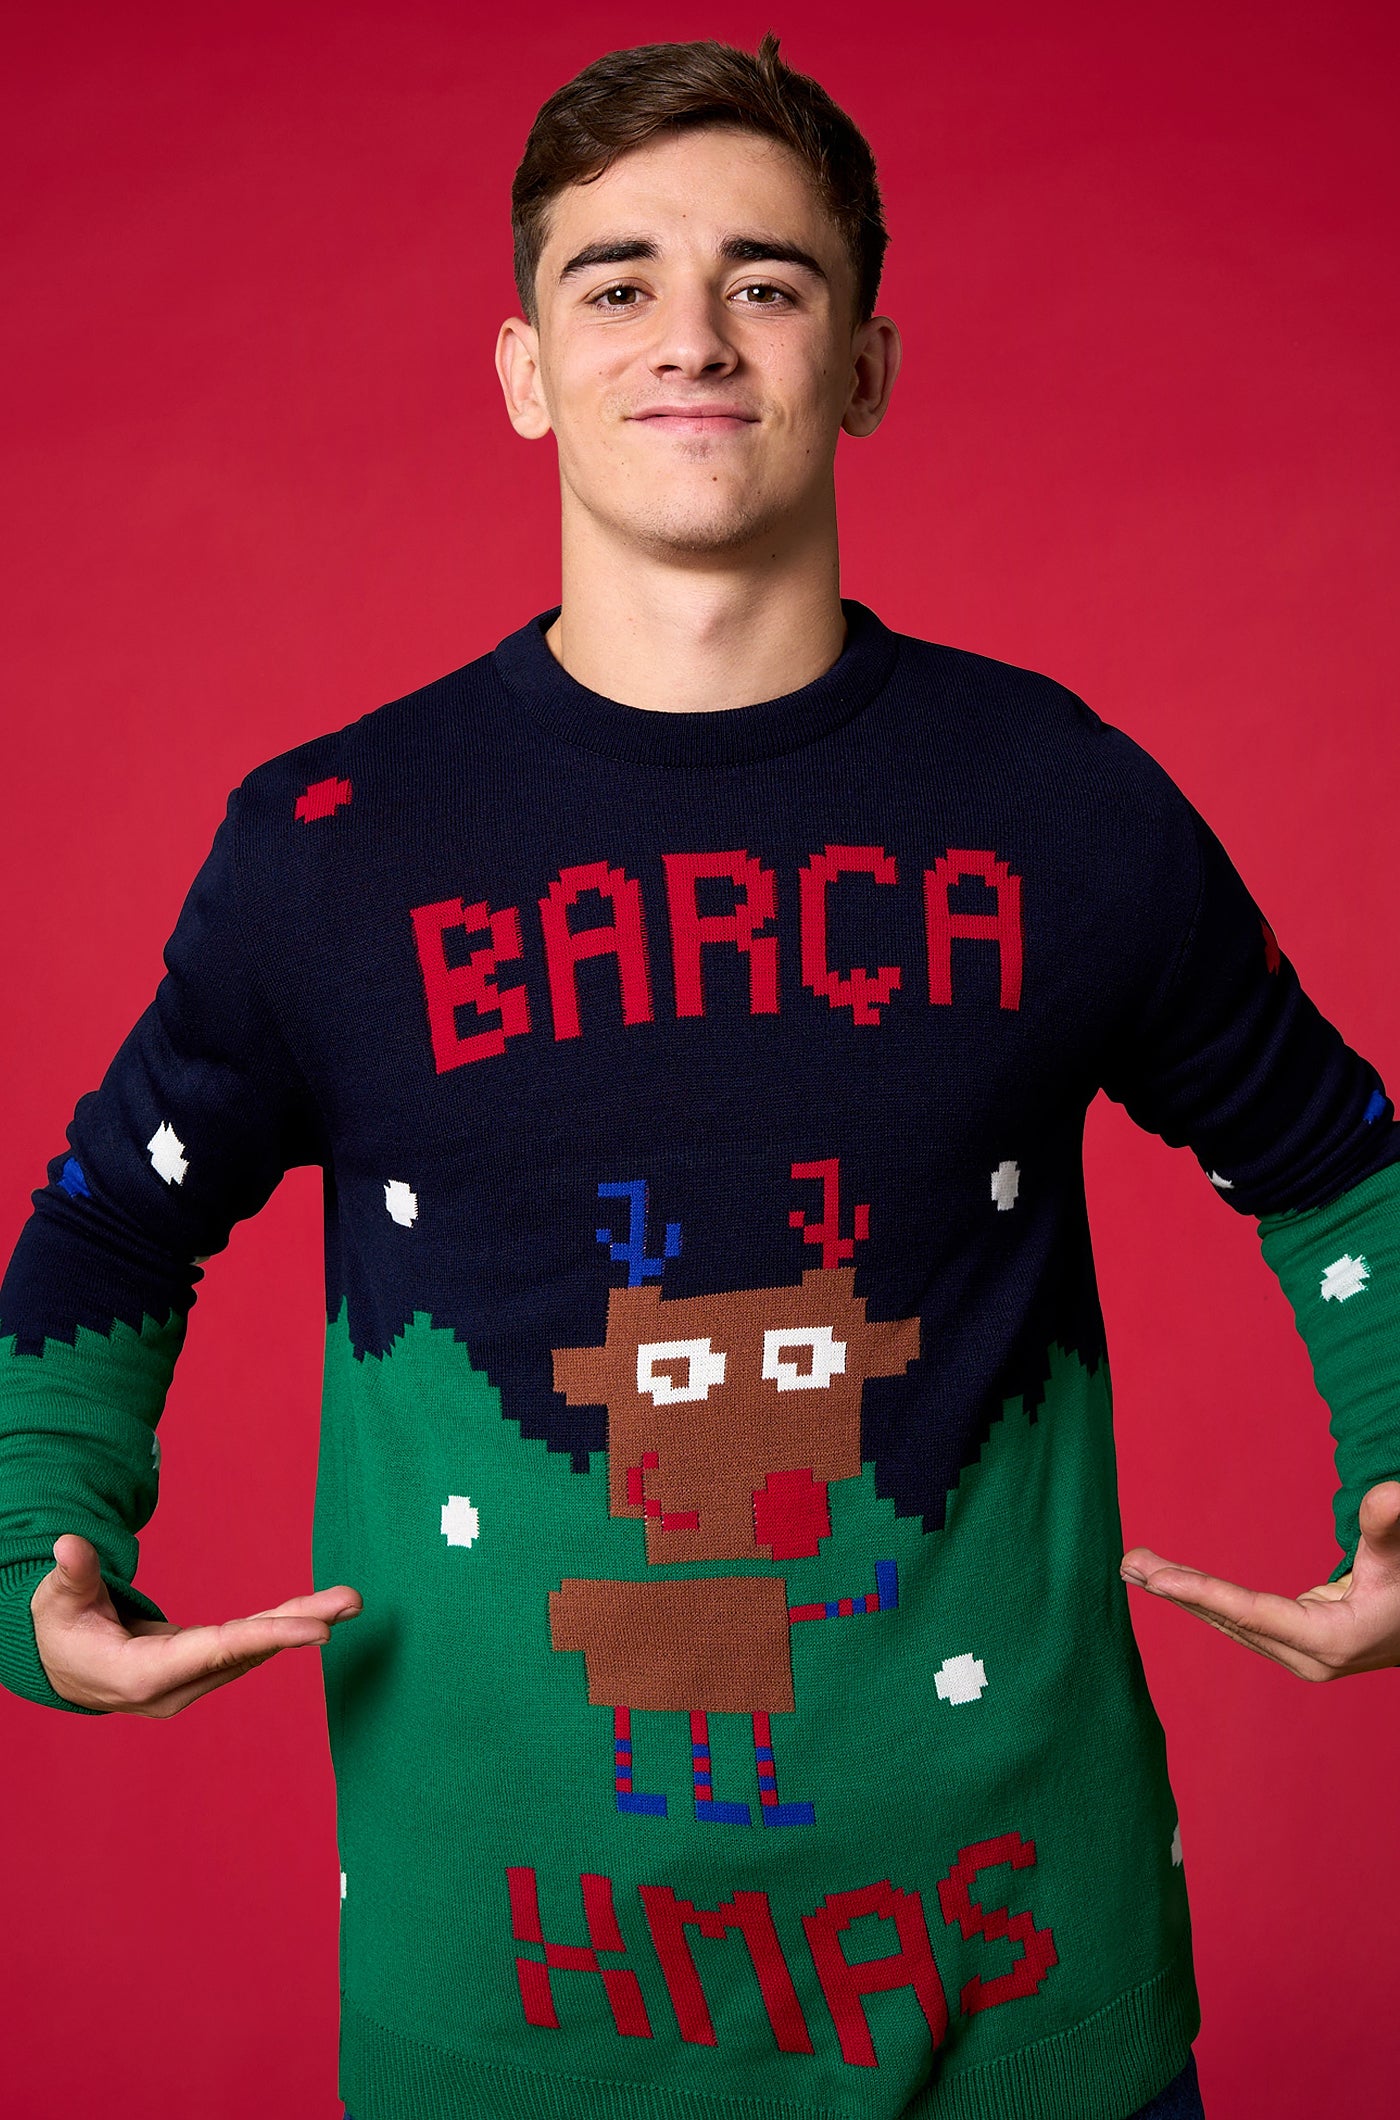 Eubi  Official FC Barcelona Merchandise